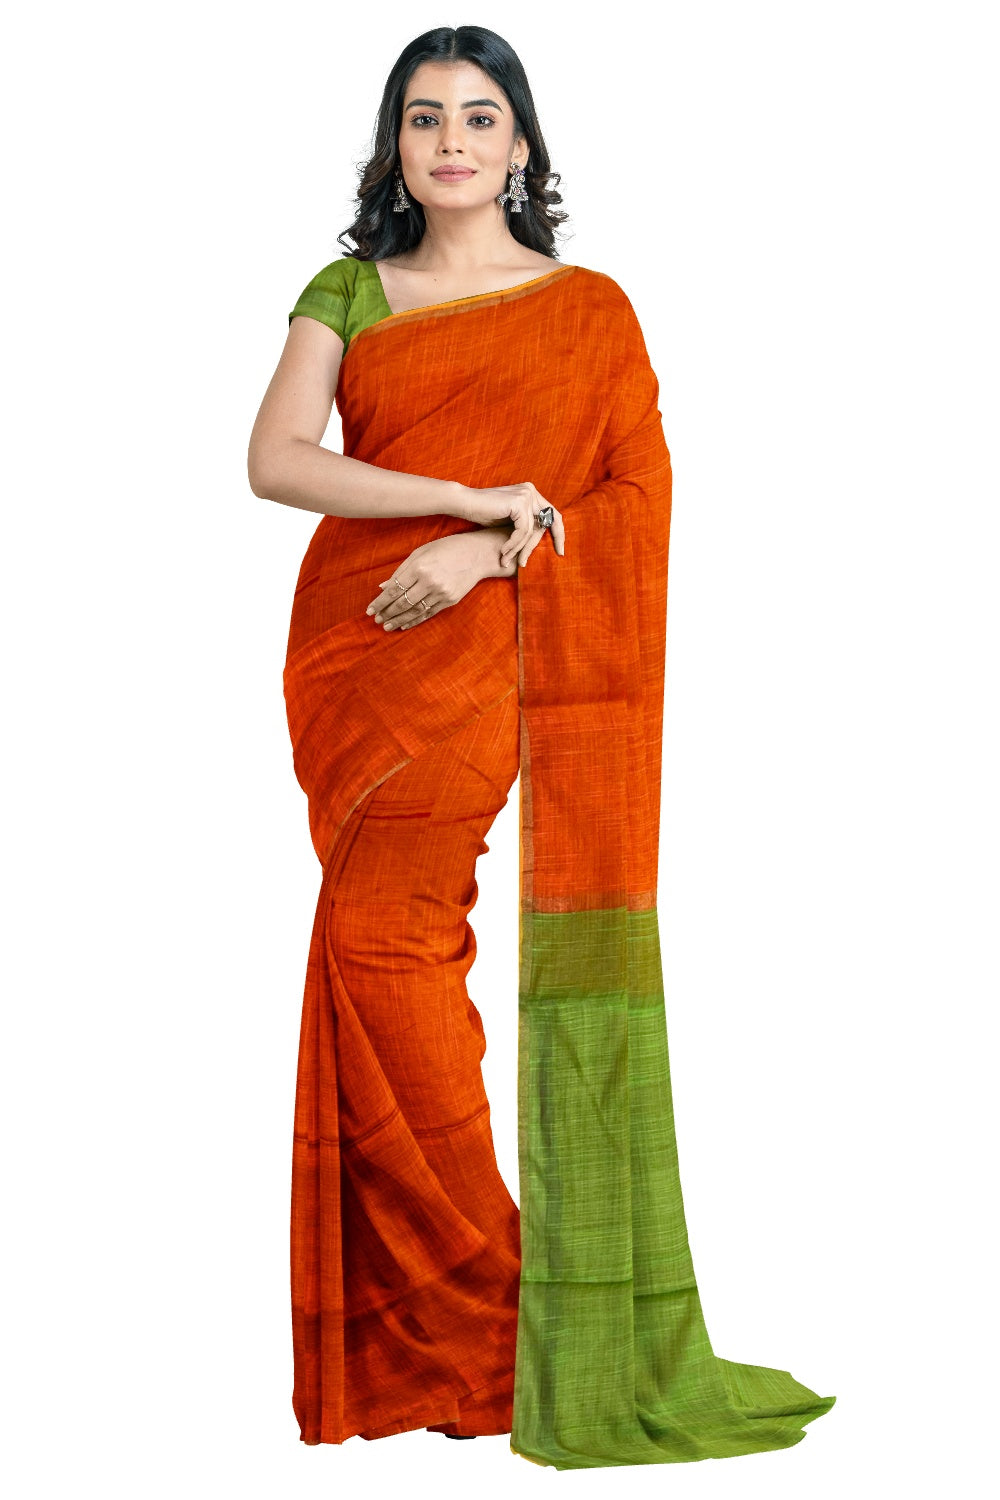 Southloom Kosa / Tussar Orange Saree with Green Pallu